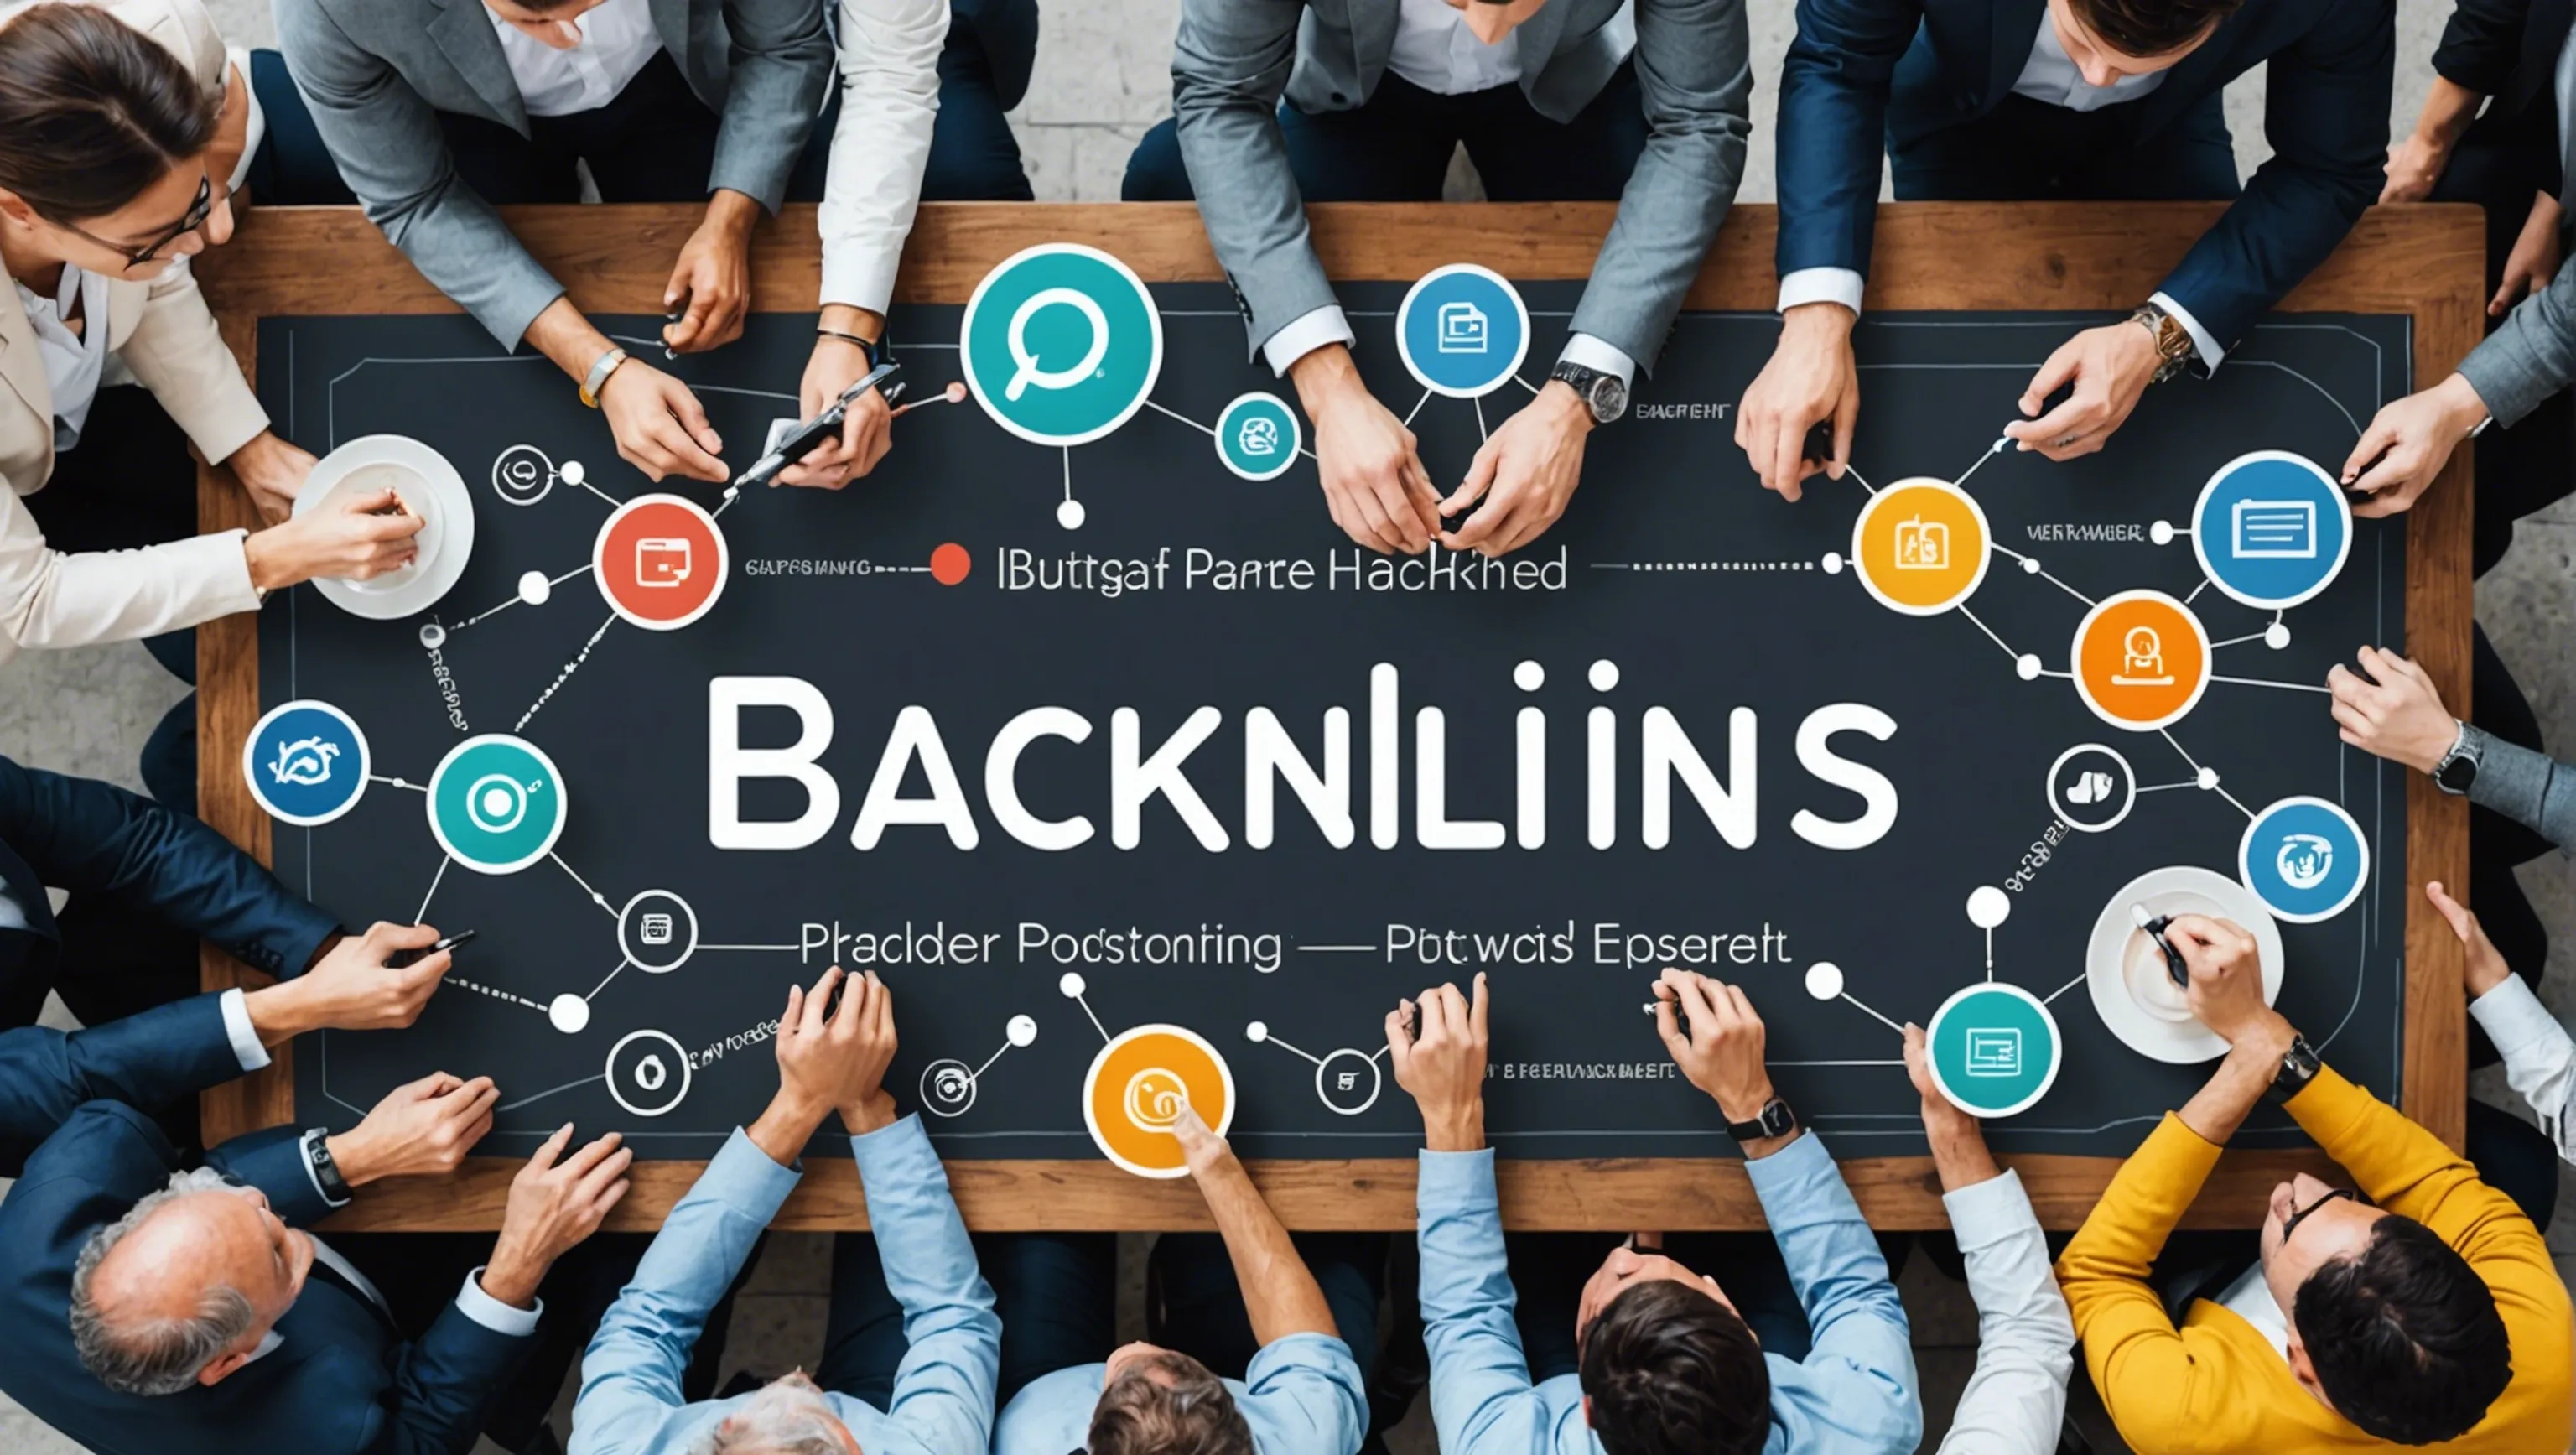 Building backlinks through partnerships - A powerful marketing strategy